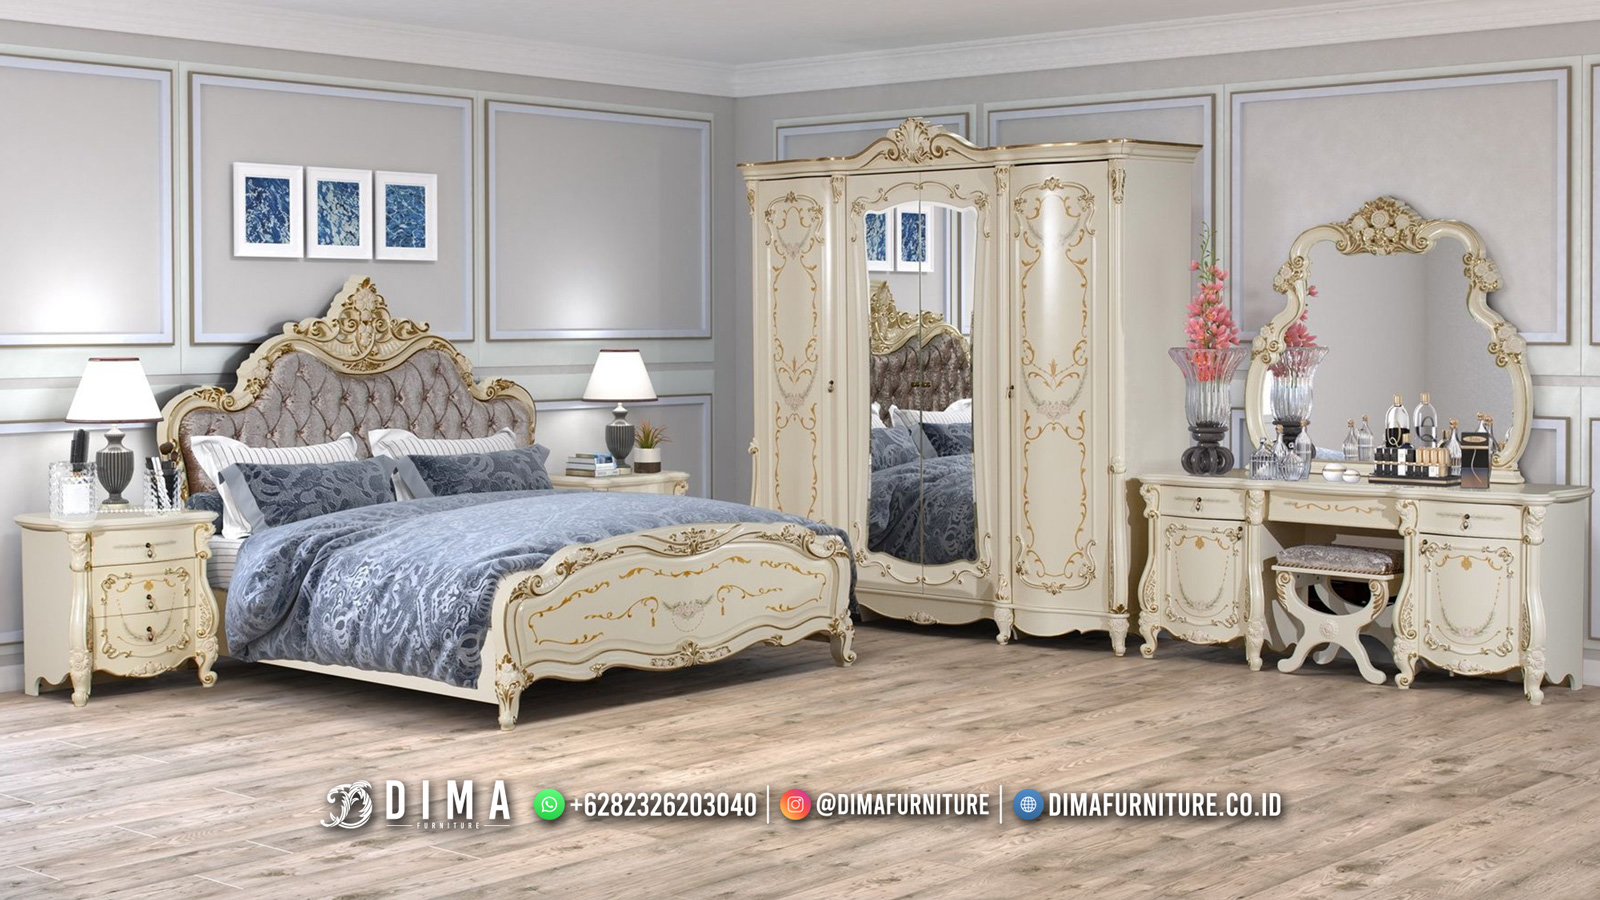 Desain Tempat Tidur Mewah Ukir Jepara Elegan Turki Style DF-2245